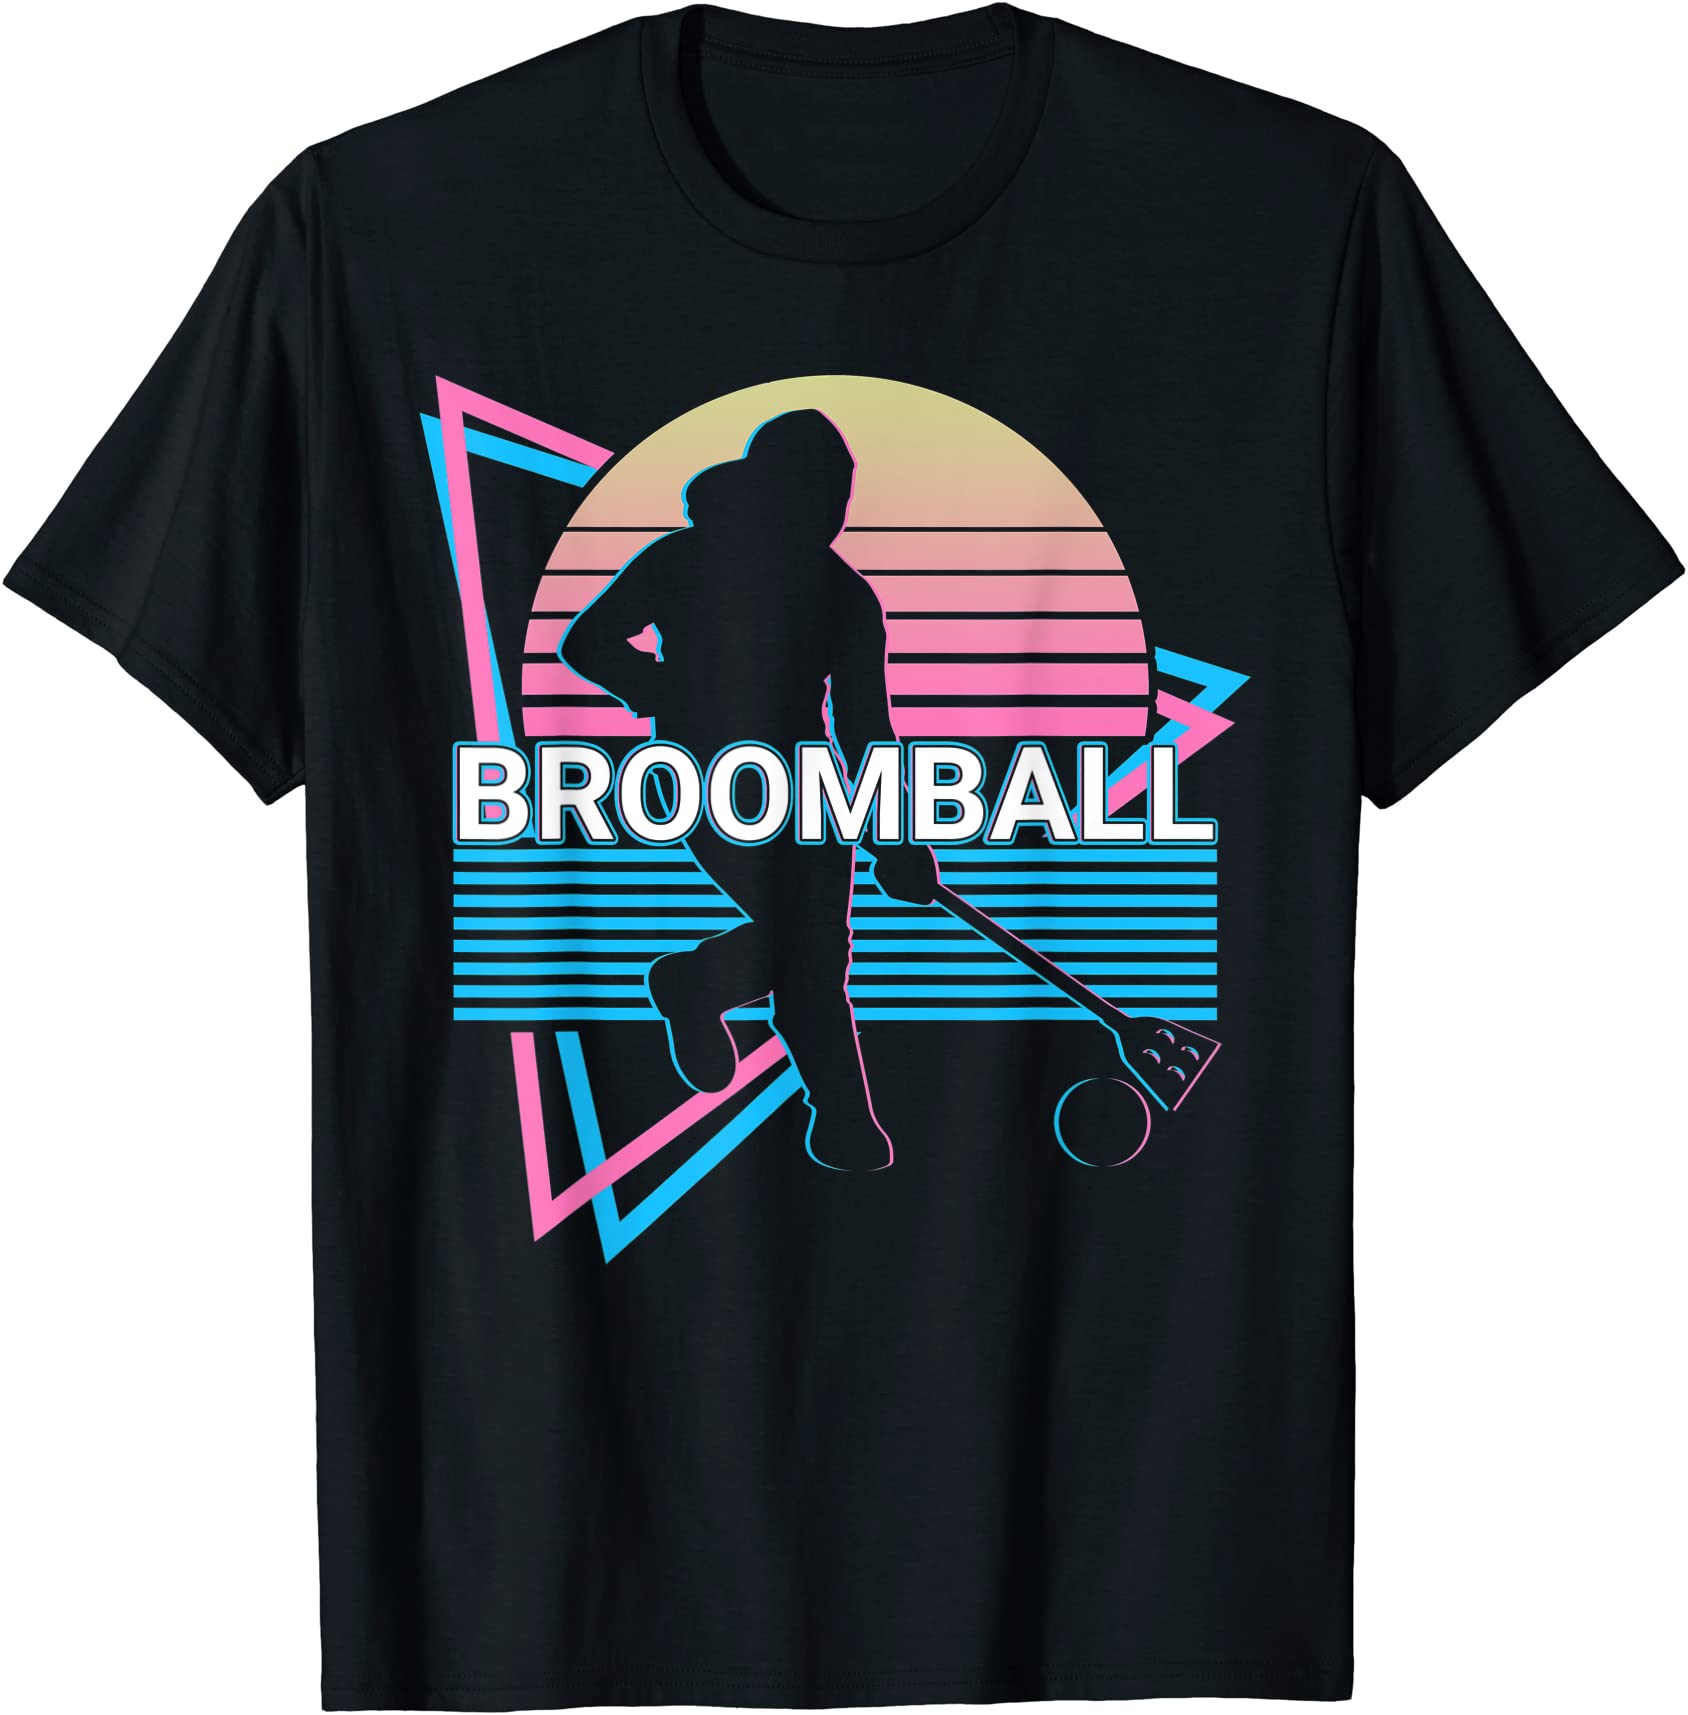 broomball player retro t shirt men - Buy t-shirt designs